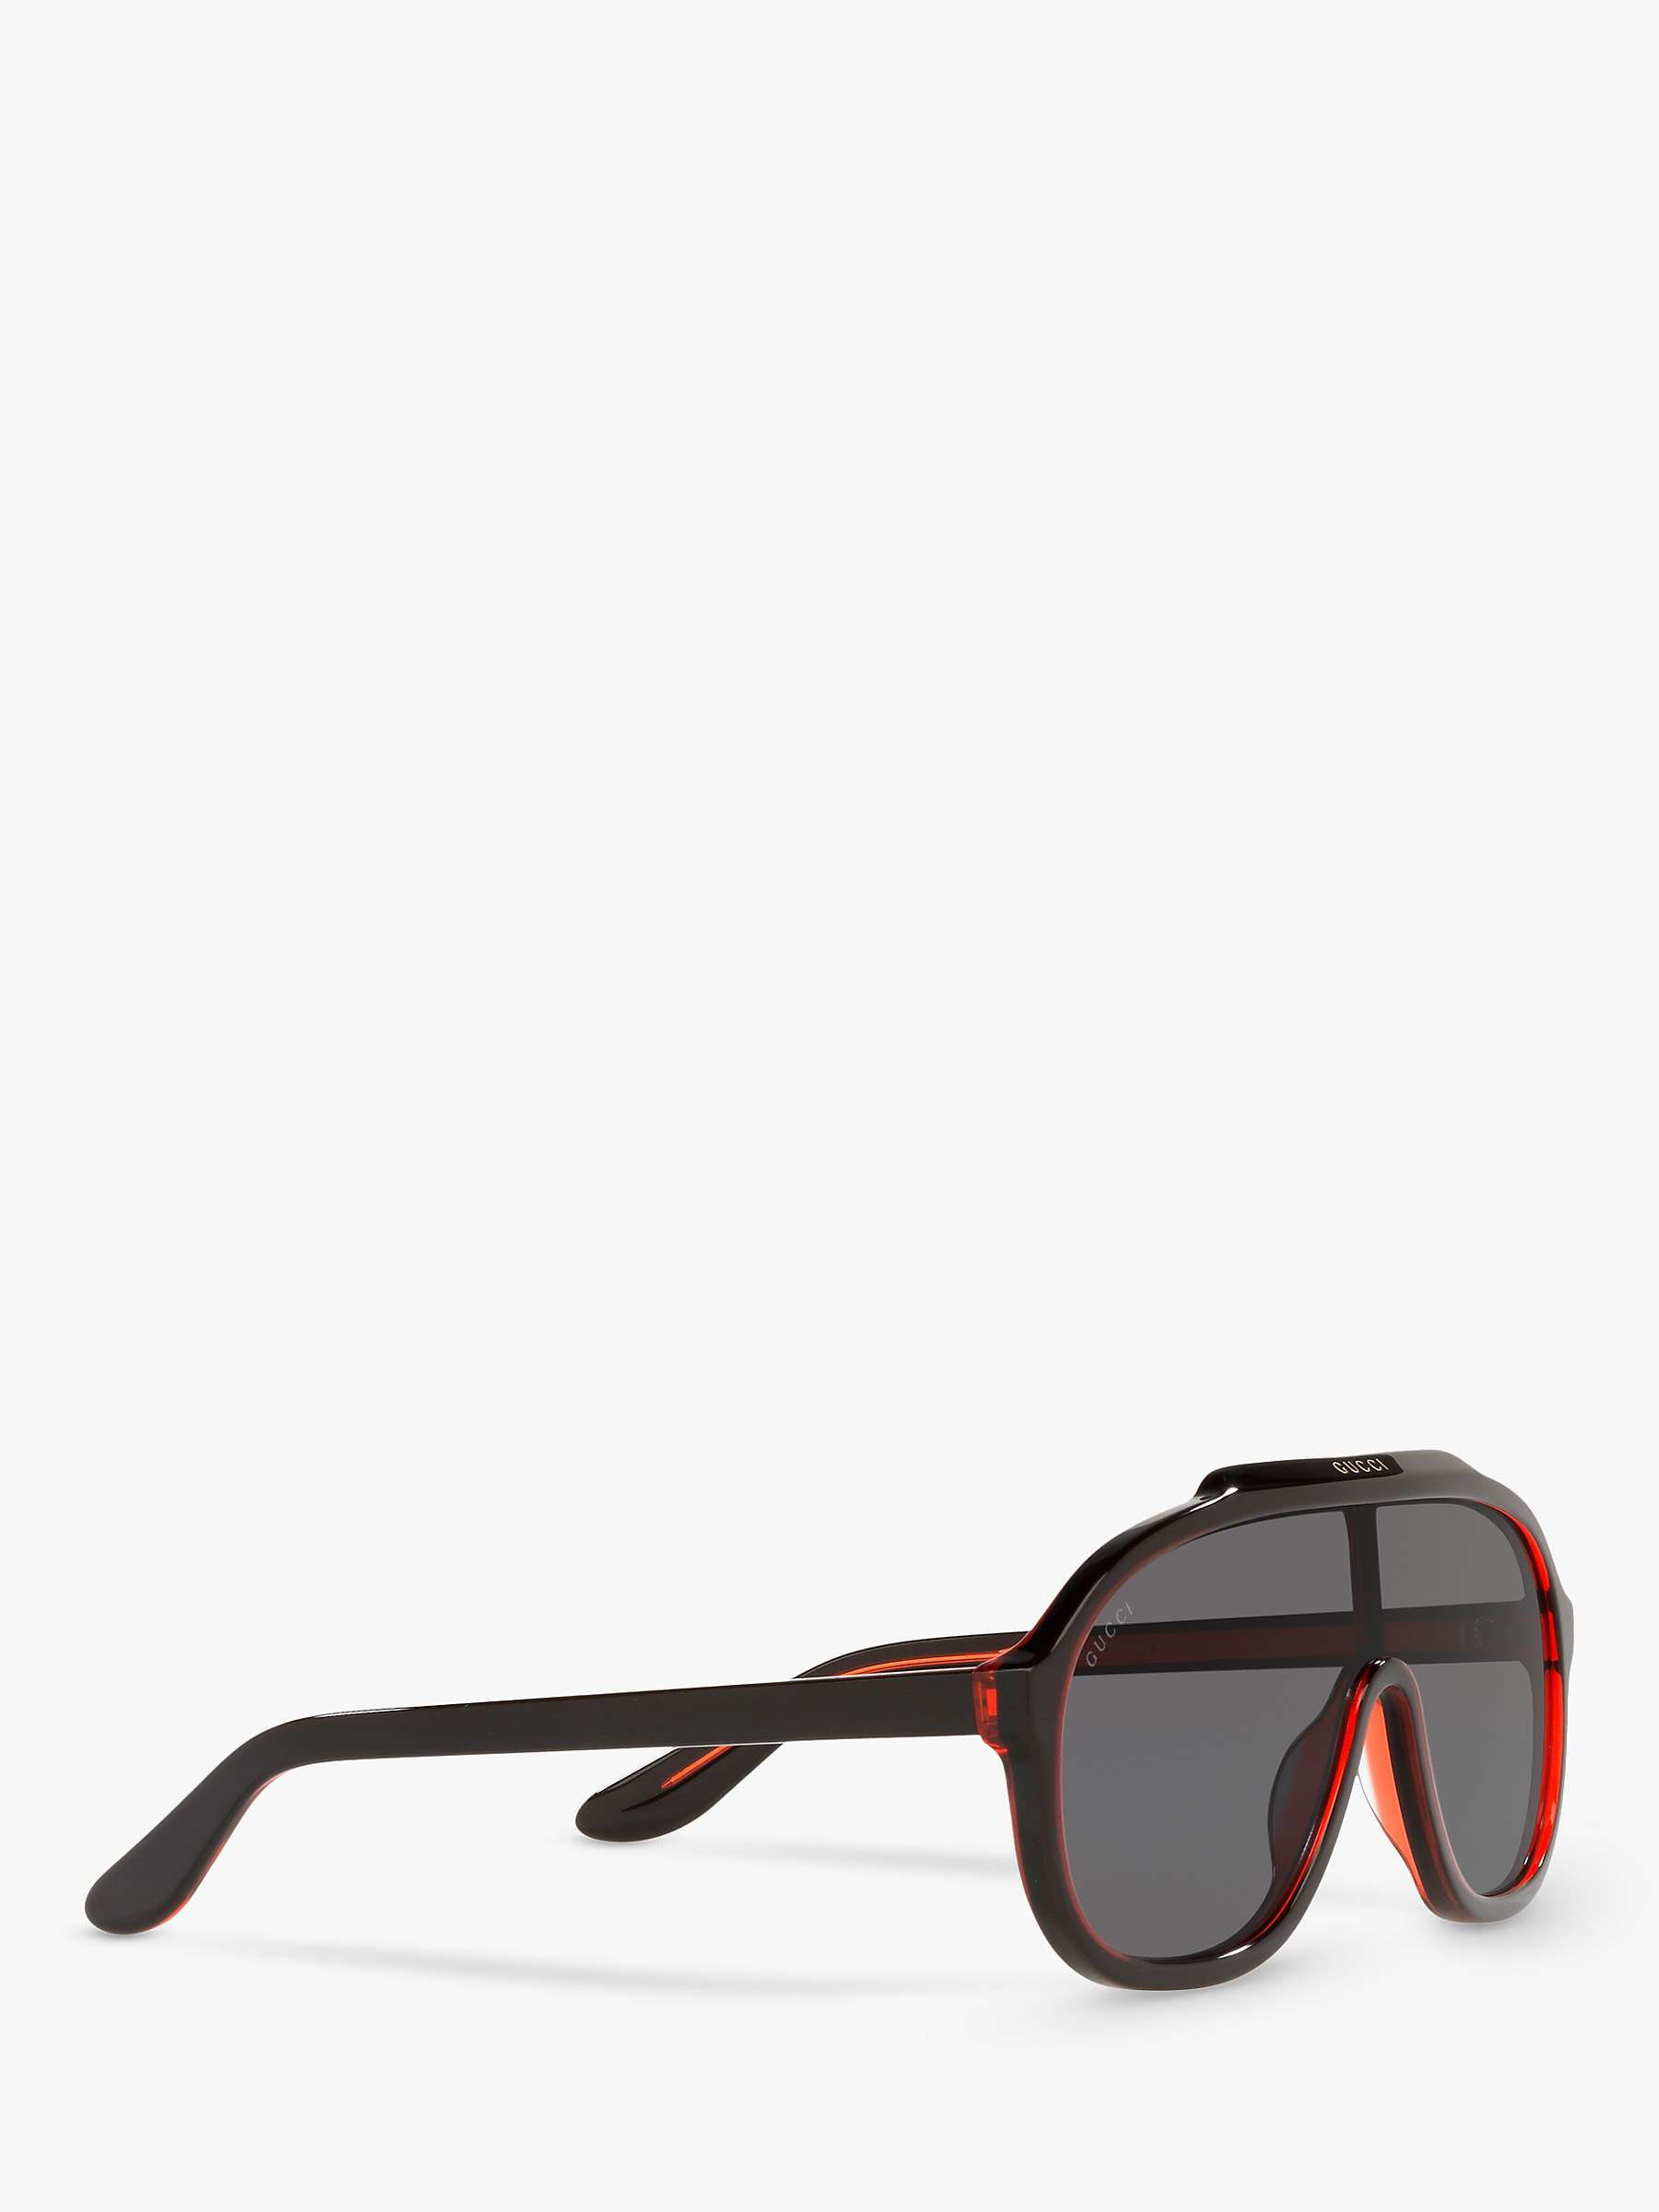 Buy Gucci GG1038S Men's s Pilot Sunglasses, Black/Grey Online at johnlewis.com